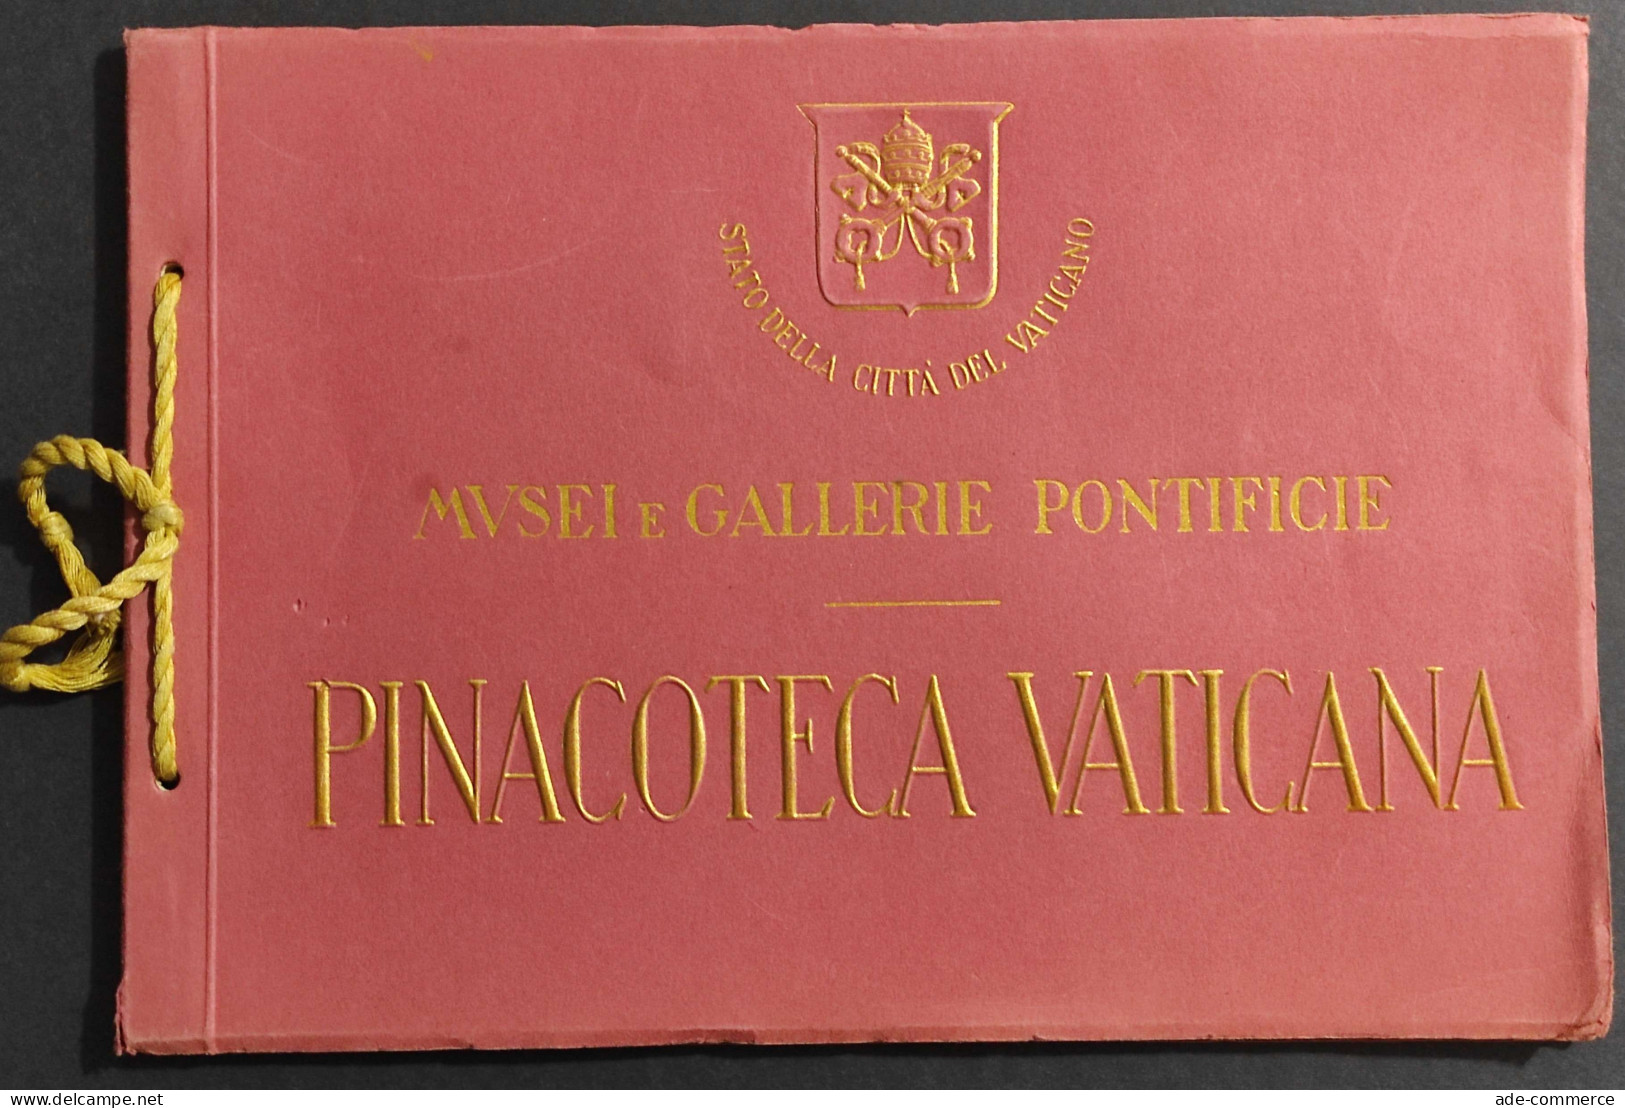 Musei E Gallerie Pontificie - Pinacoteca Vaticana - Arts, Antiquity